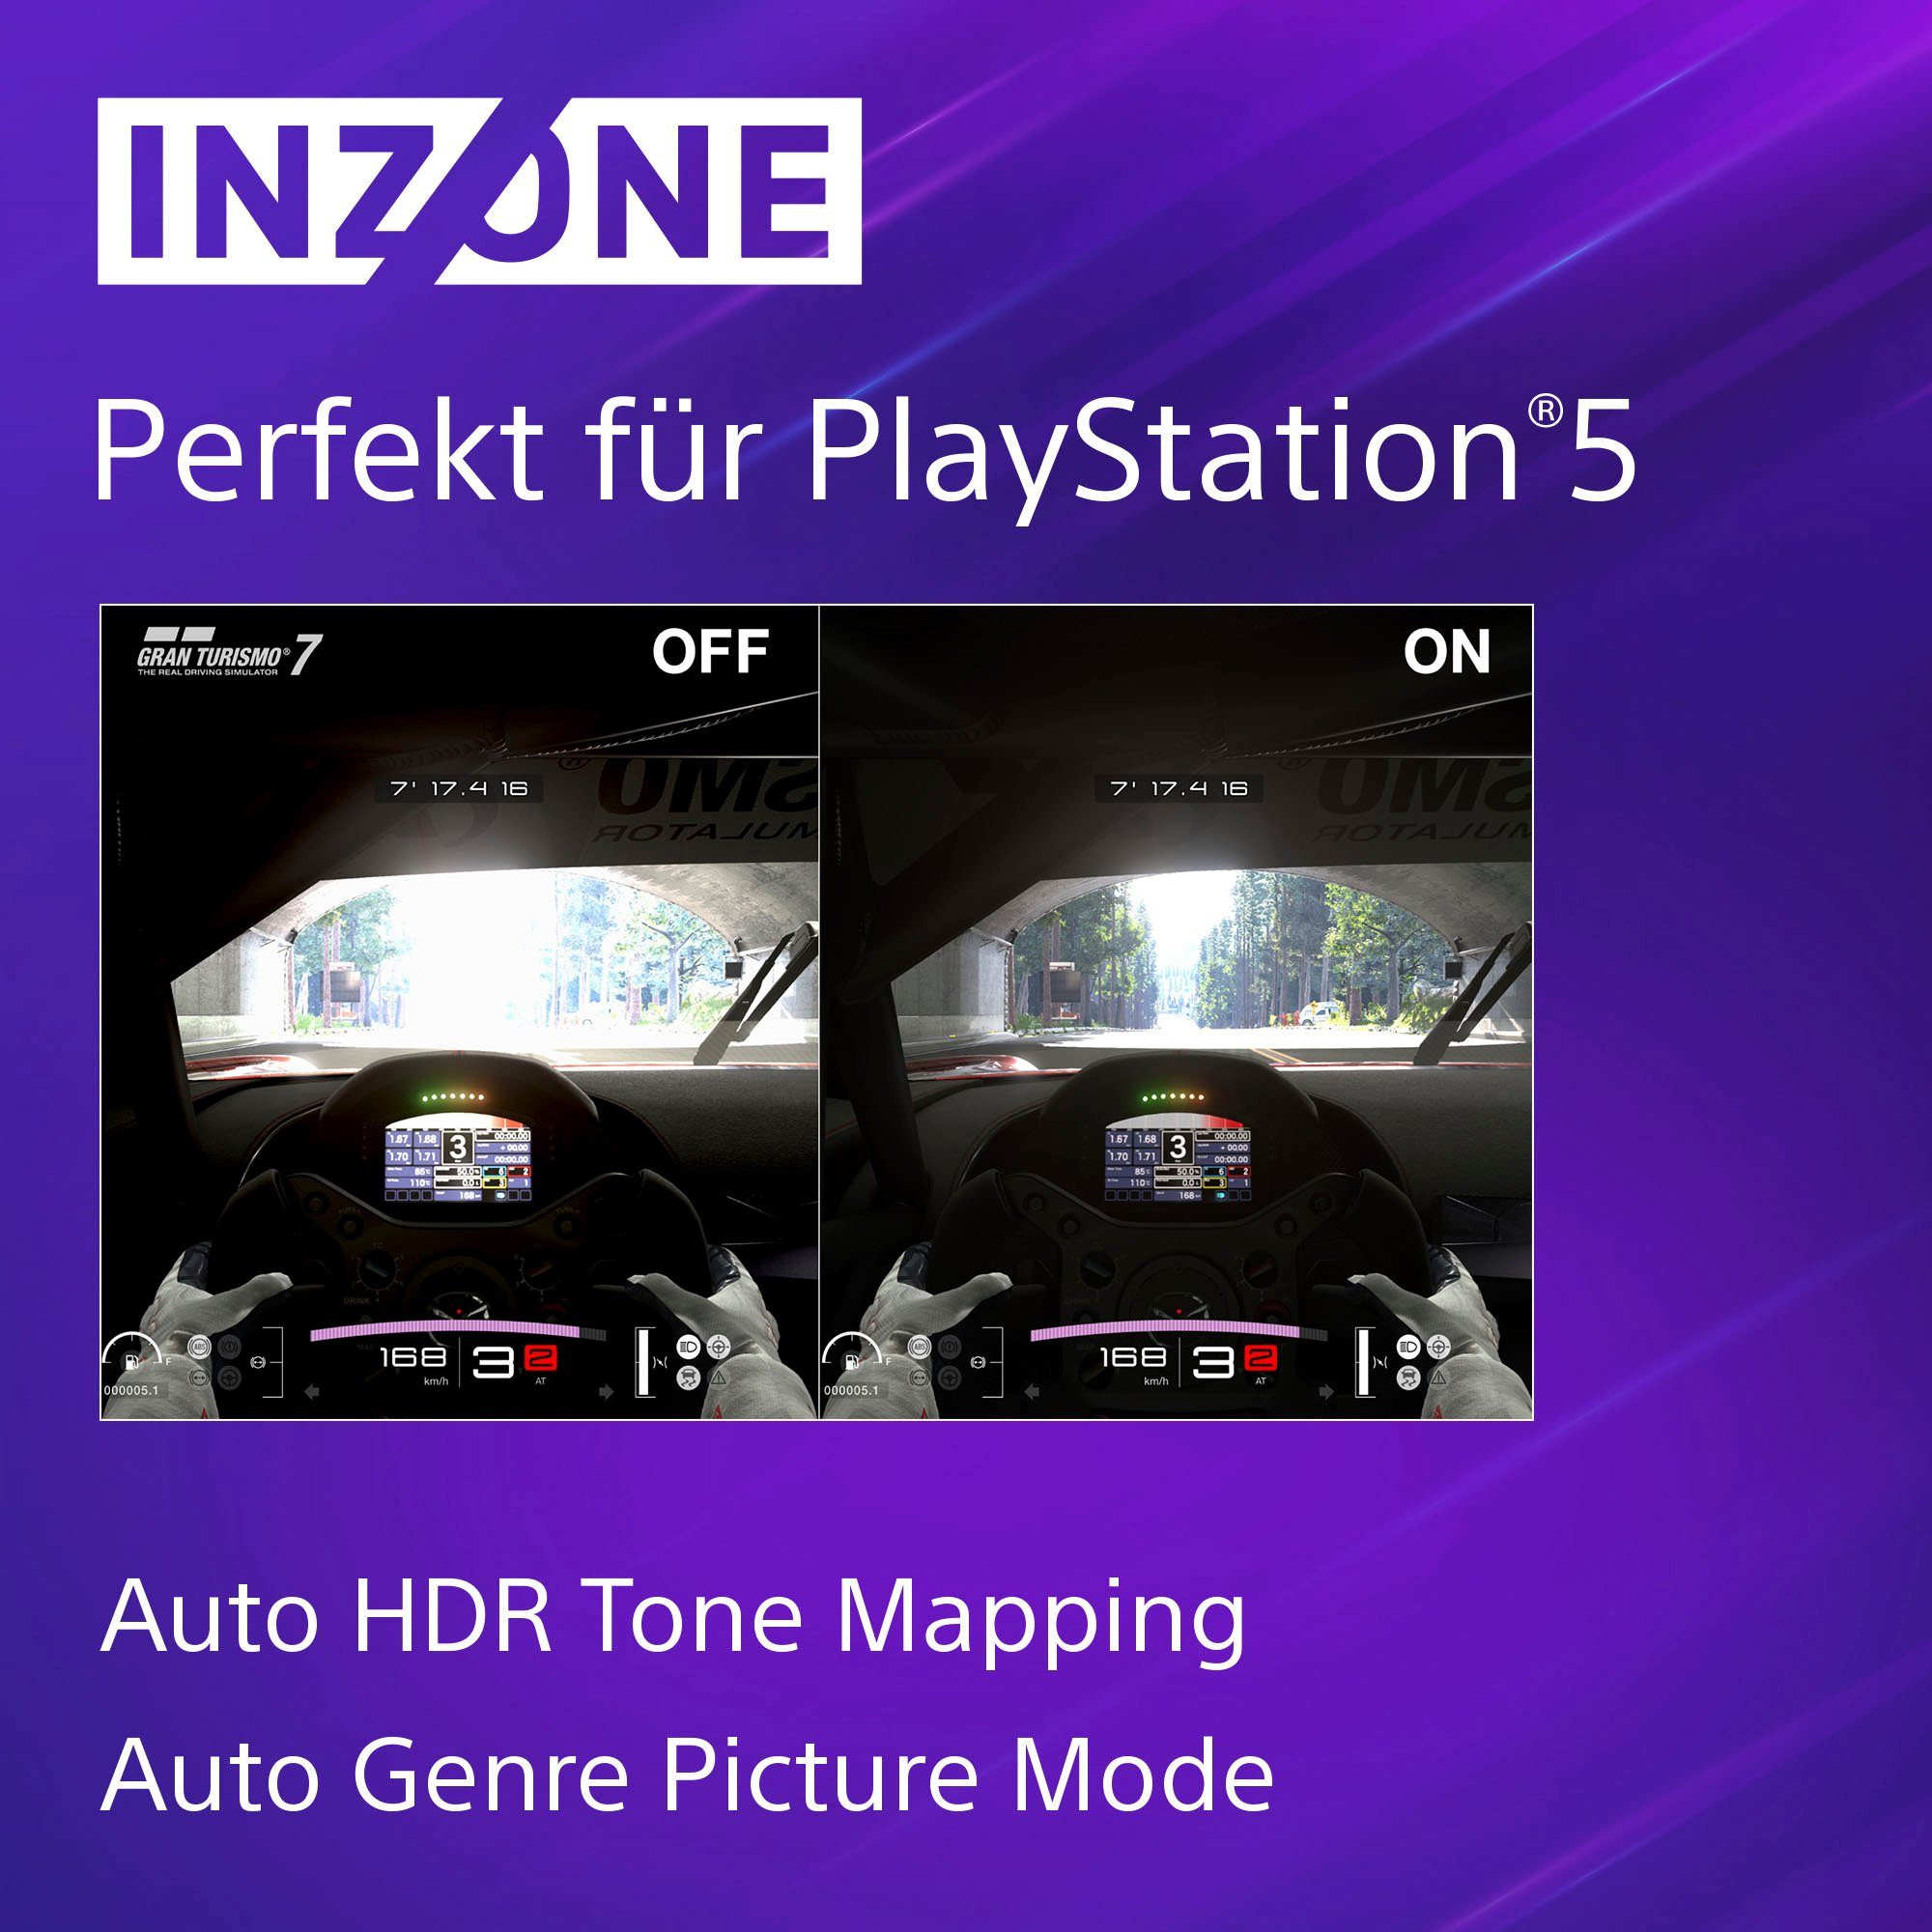 Sony INZONE M3 1 1080 HD, PlayStation®5) ", 1920 ms (69 x cm/27 240 Hz, px, Perfekt für Reaktionszeit, Full IPS-LCD, Gaming-Monitor